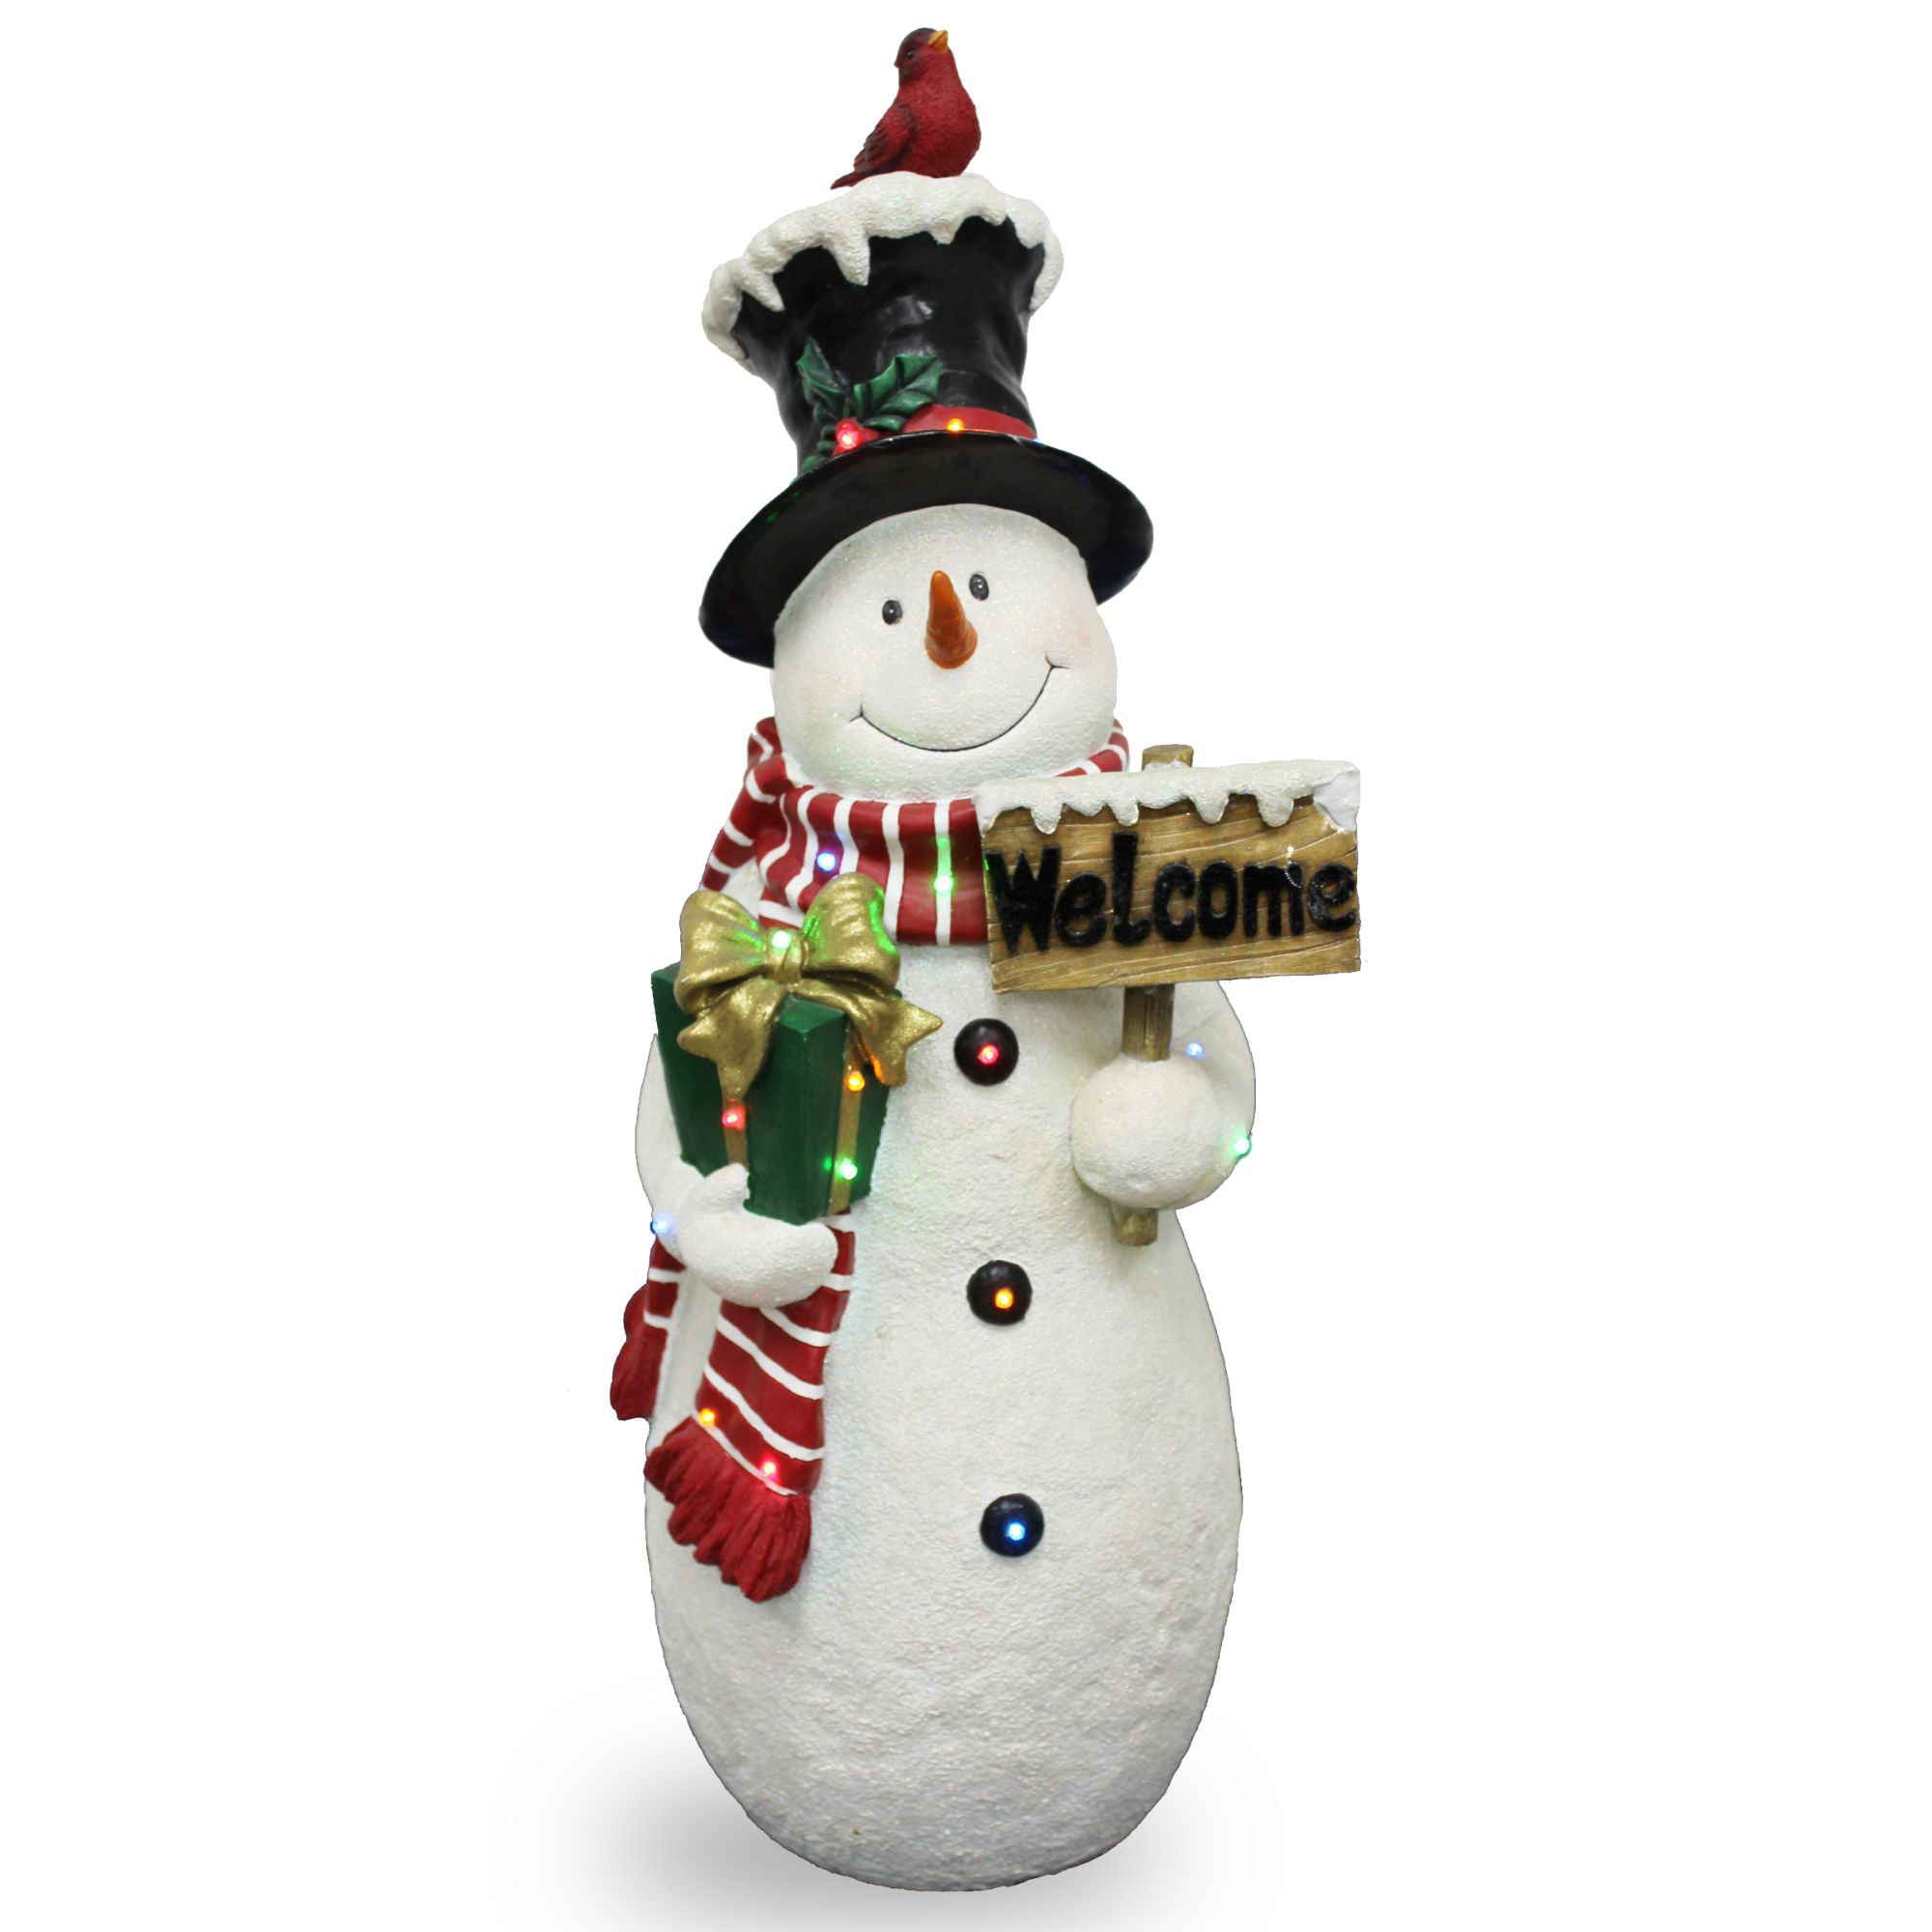 Snowman Door Greeter w/ LED Lantern GC 